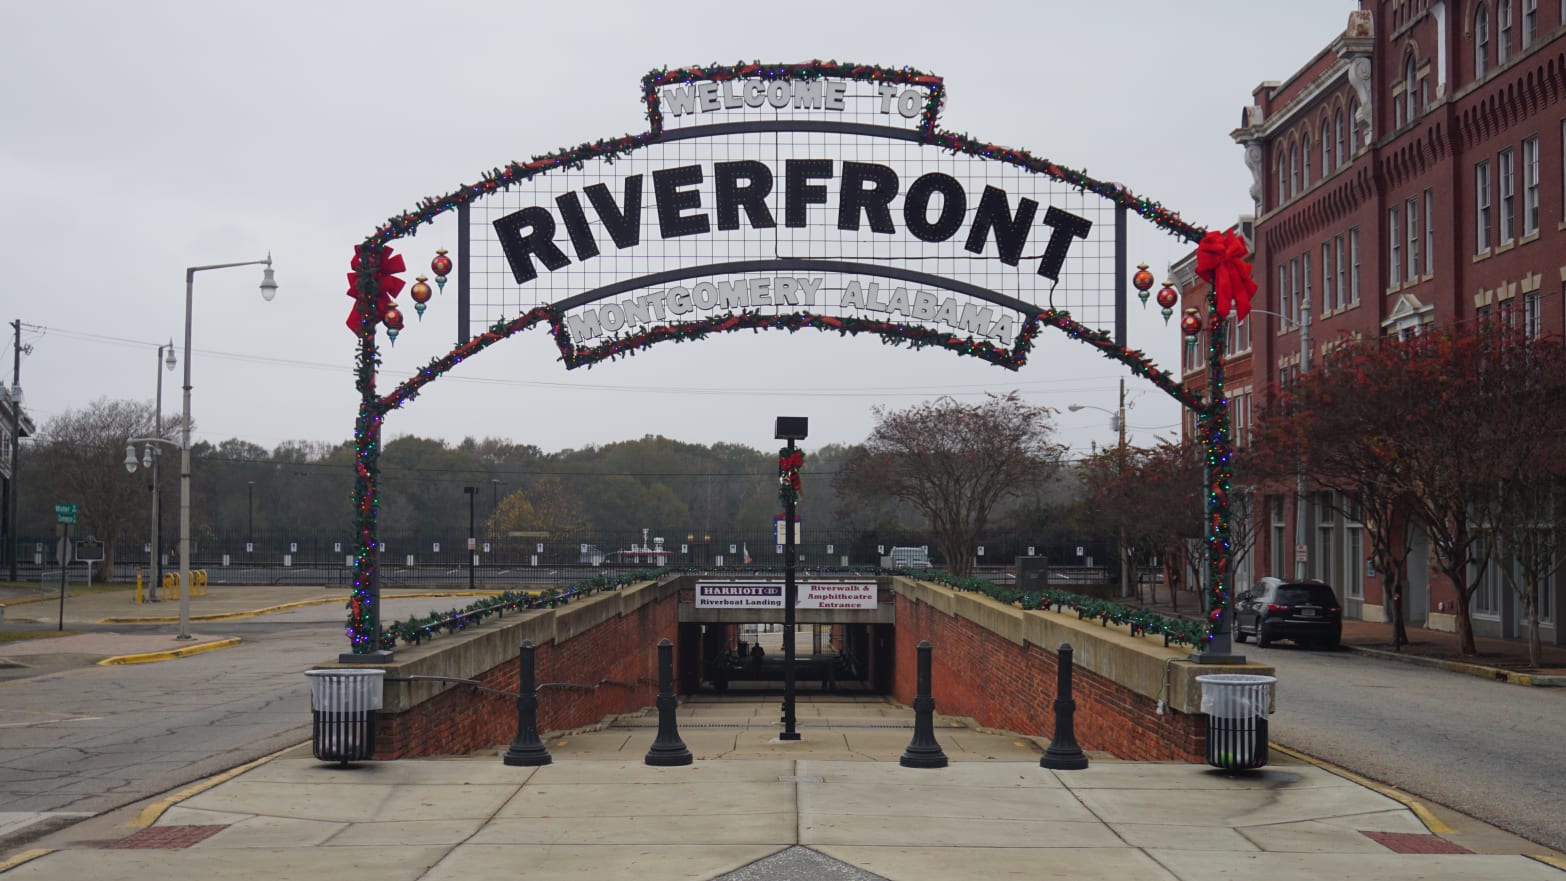 Riverfront Park dock